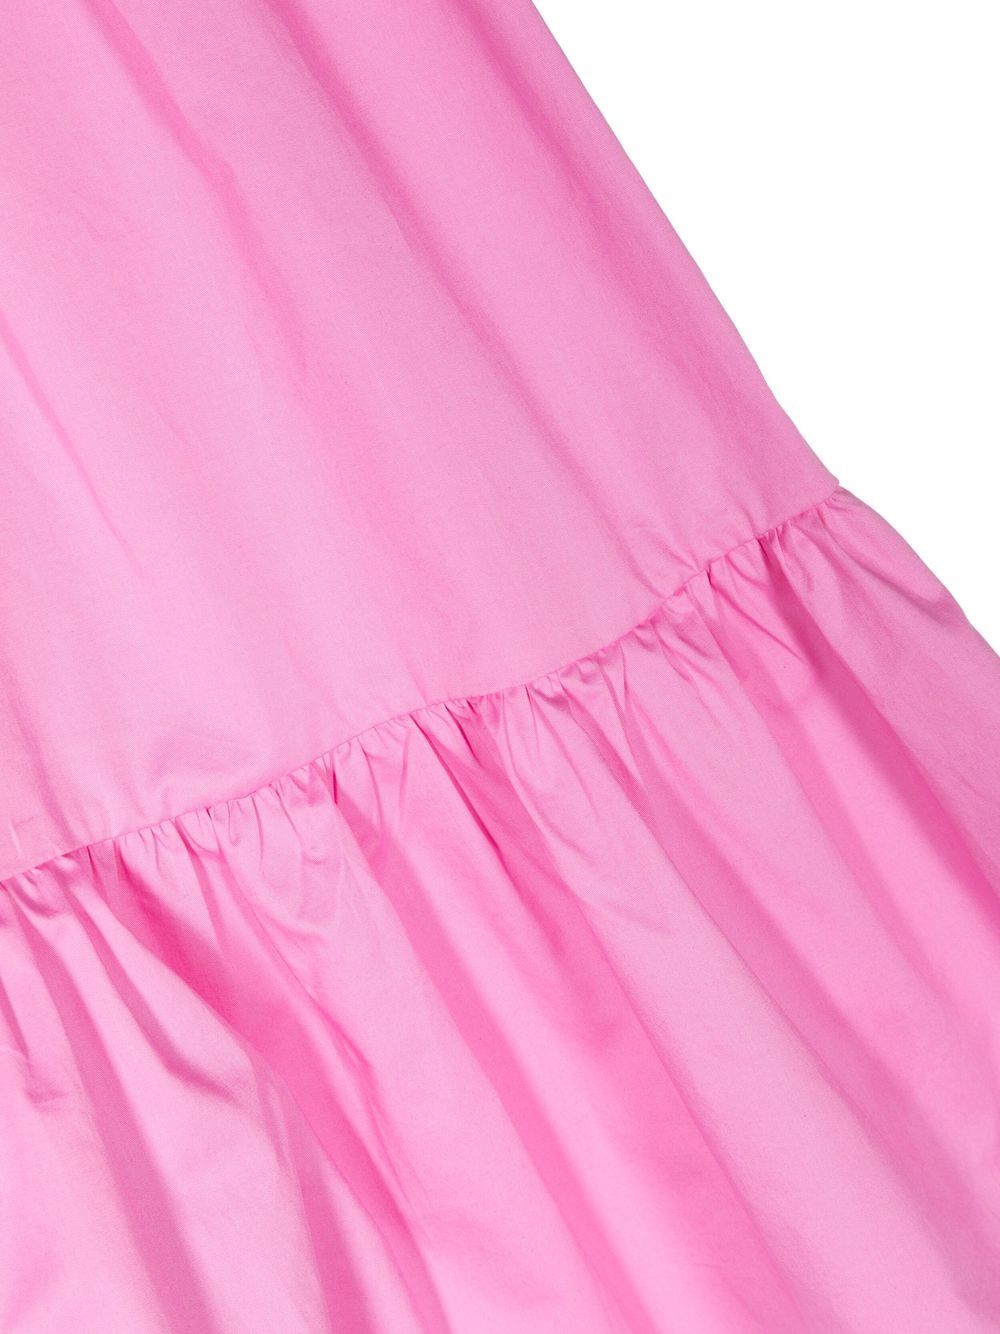 Pink dress for little girls